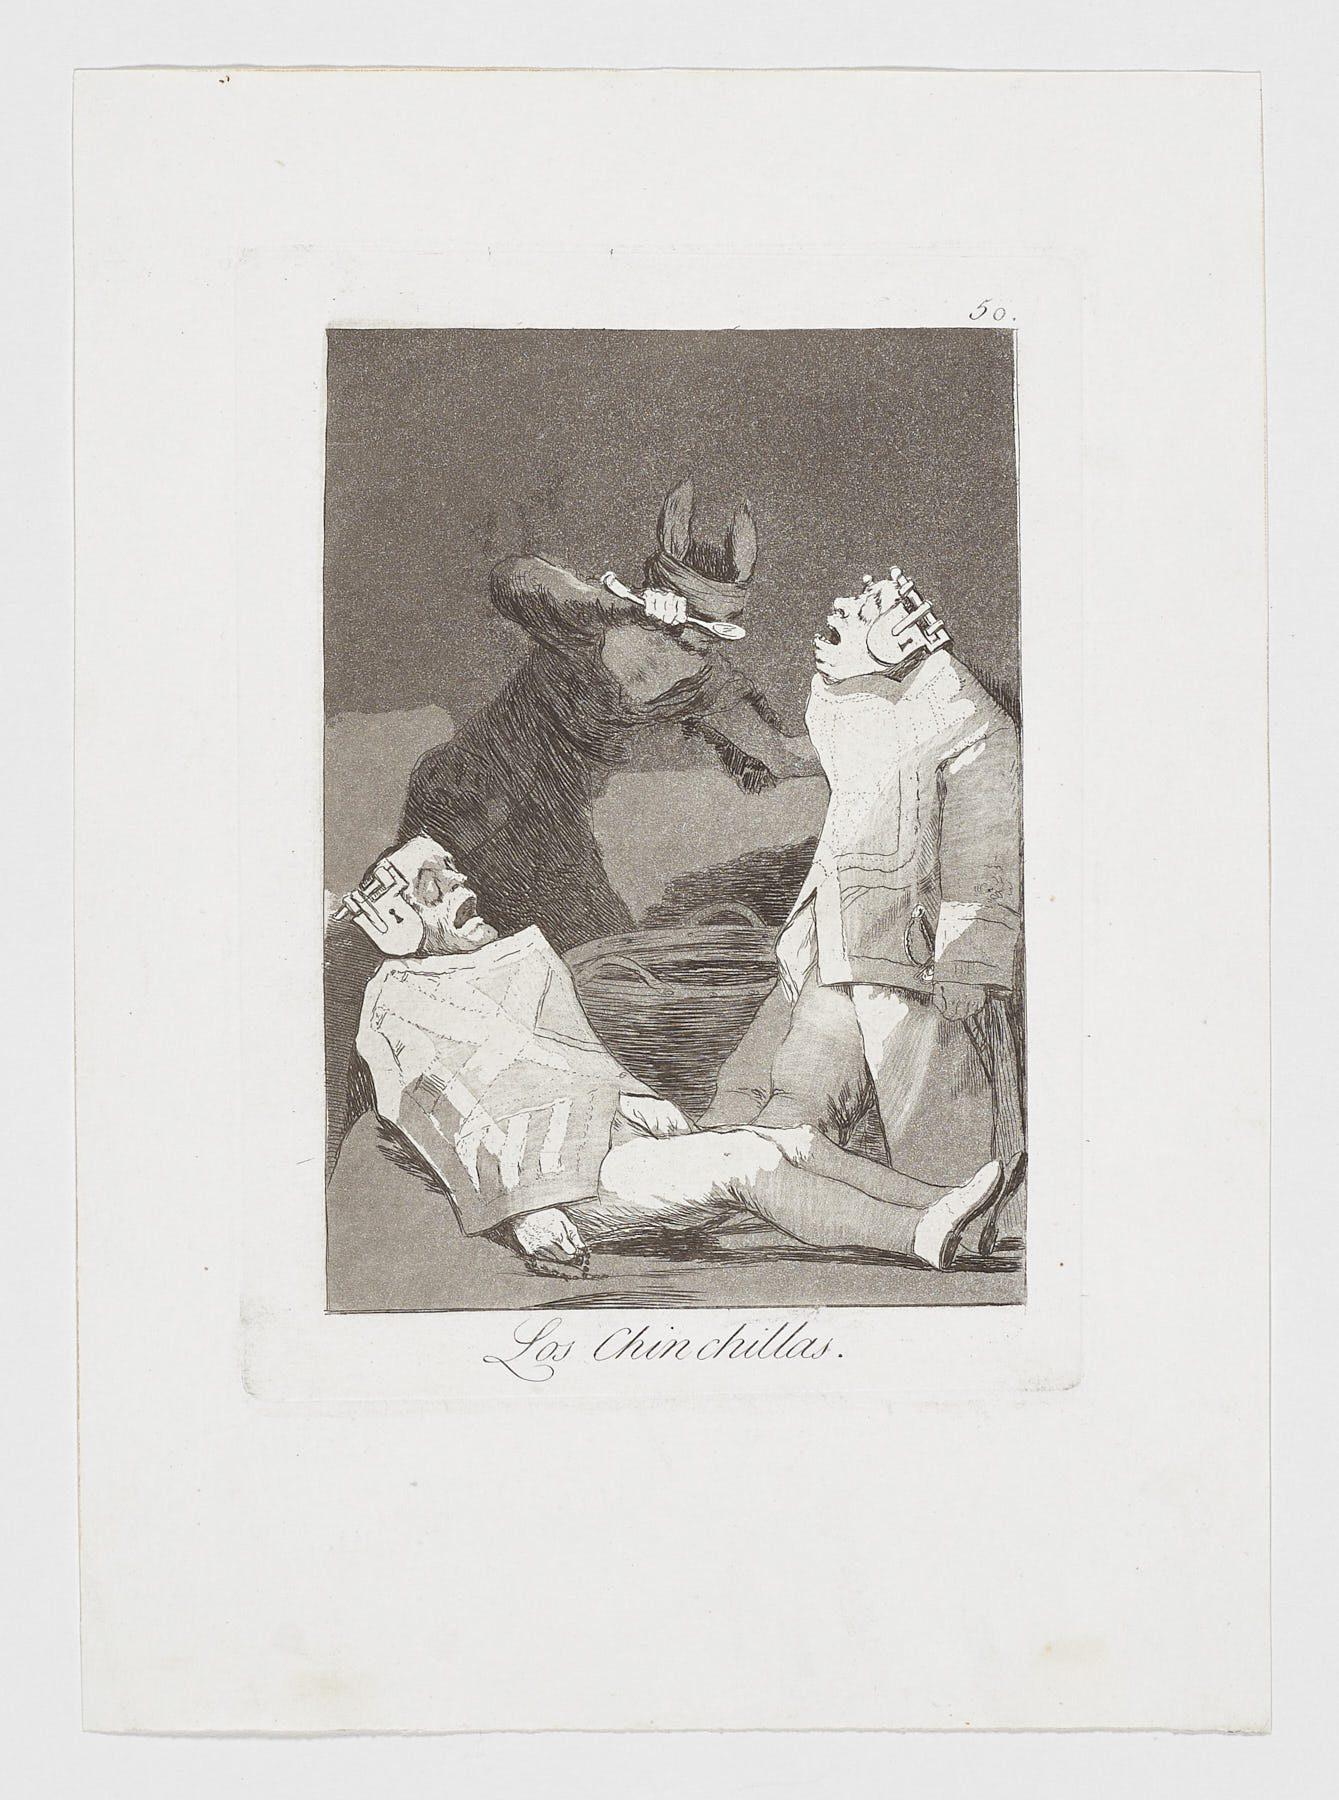 Francisco Goya Figurative Print - Francisco De Goya Caprichos Los Chinchillas 2nd edition original art print 